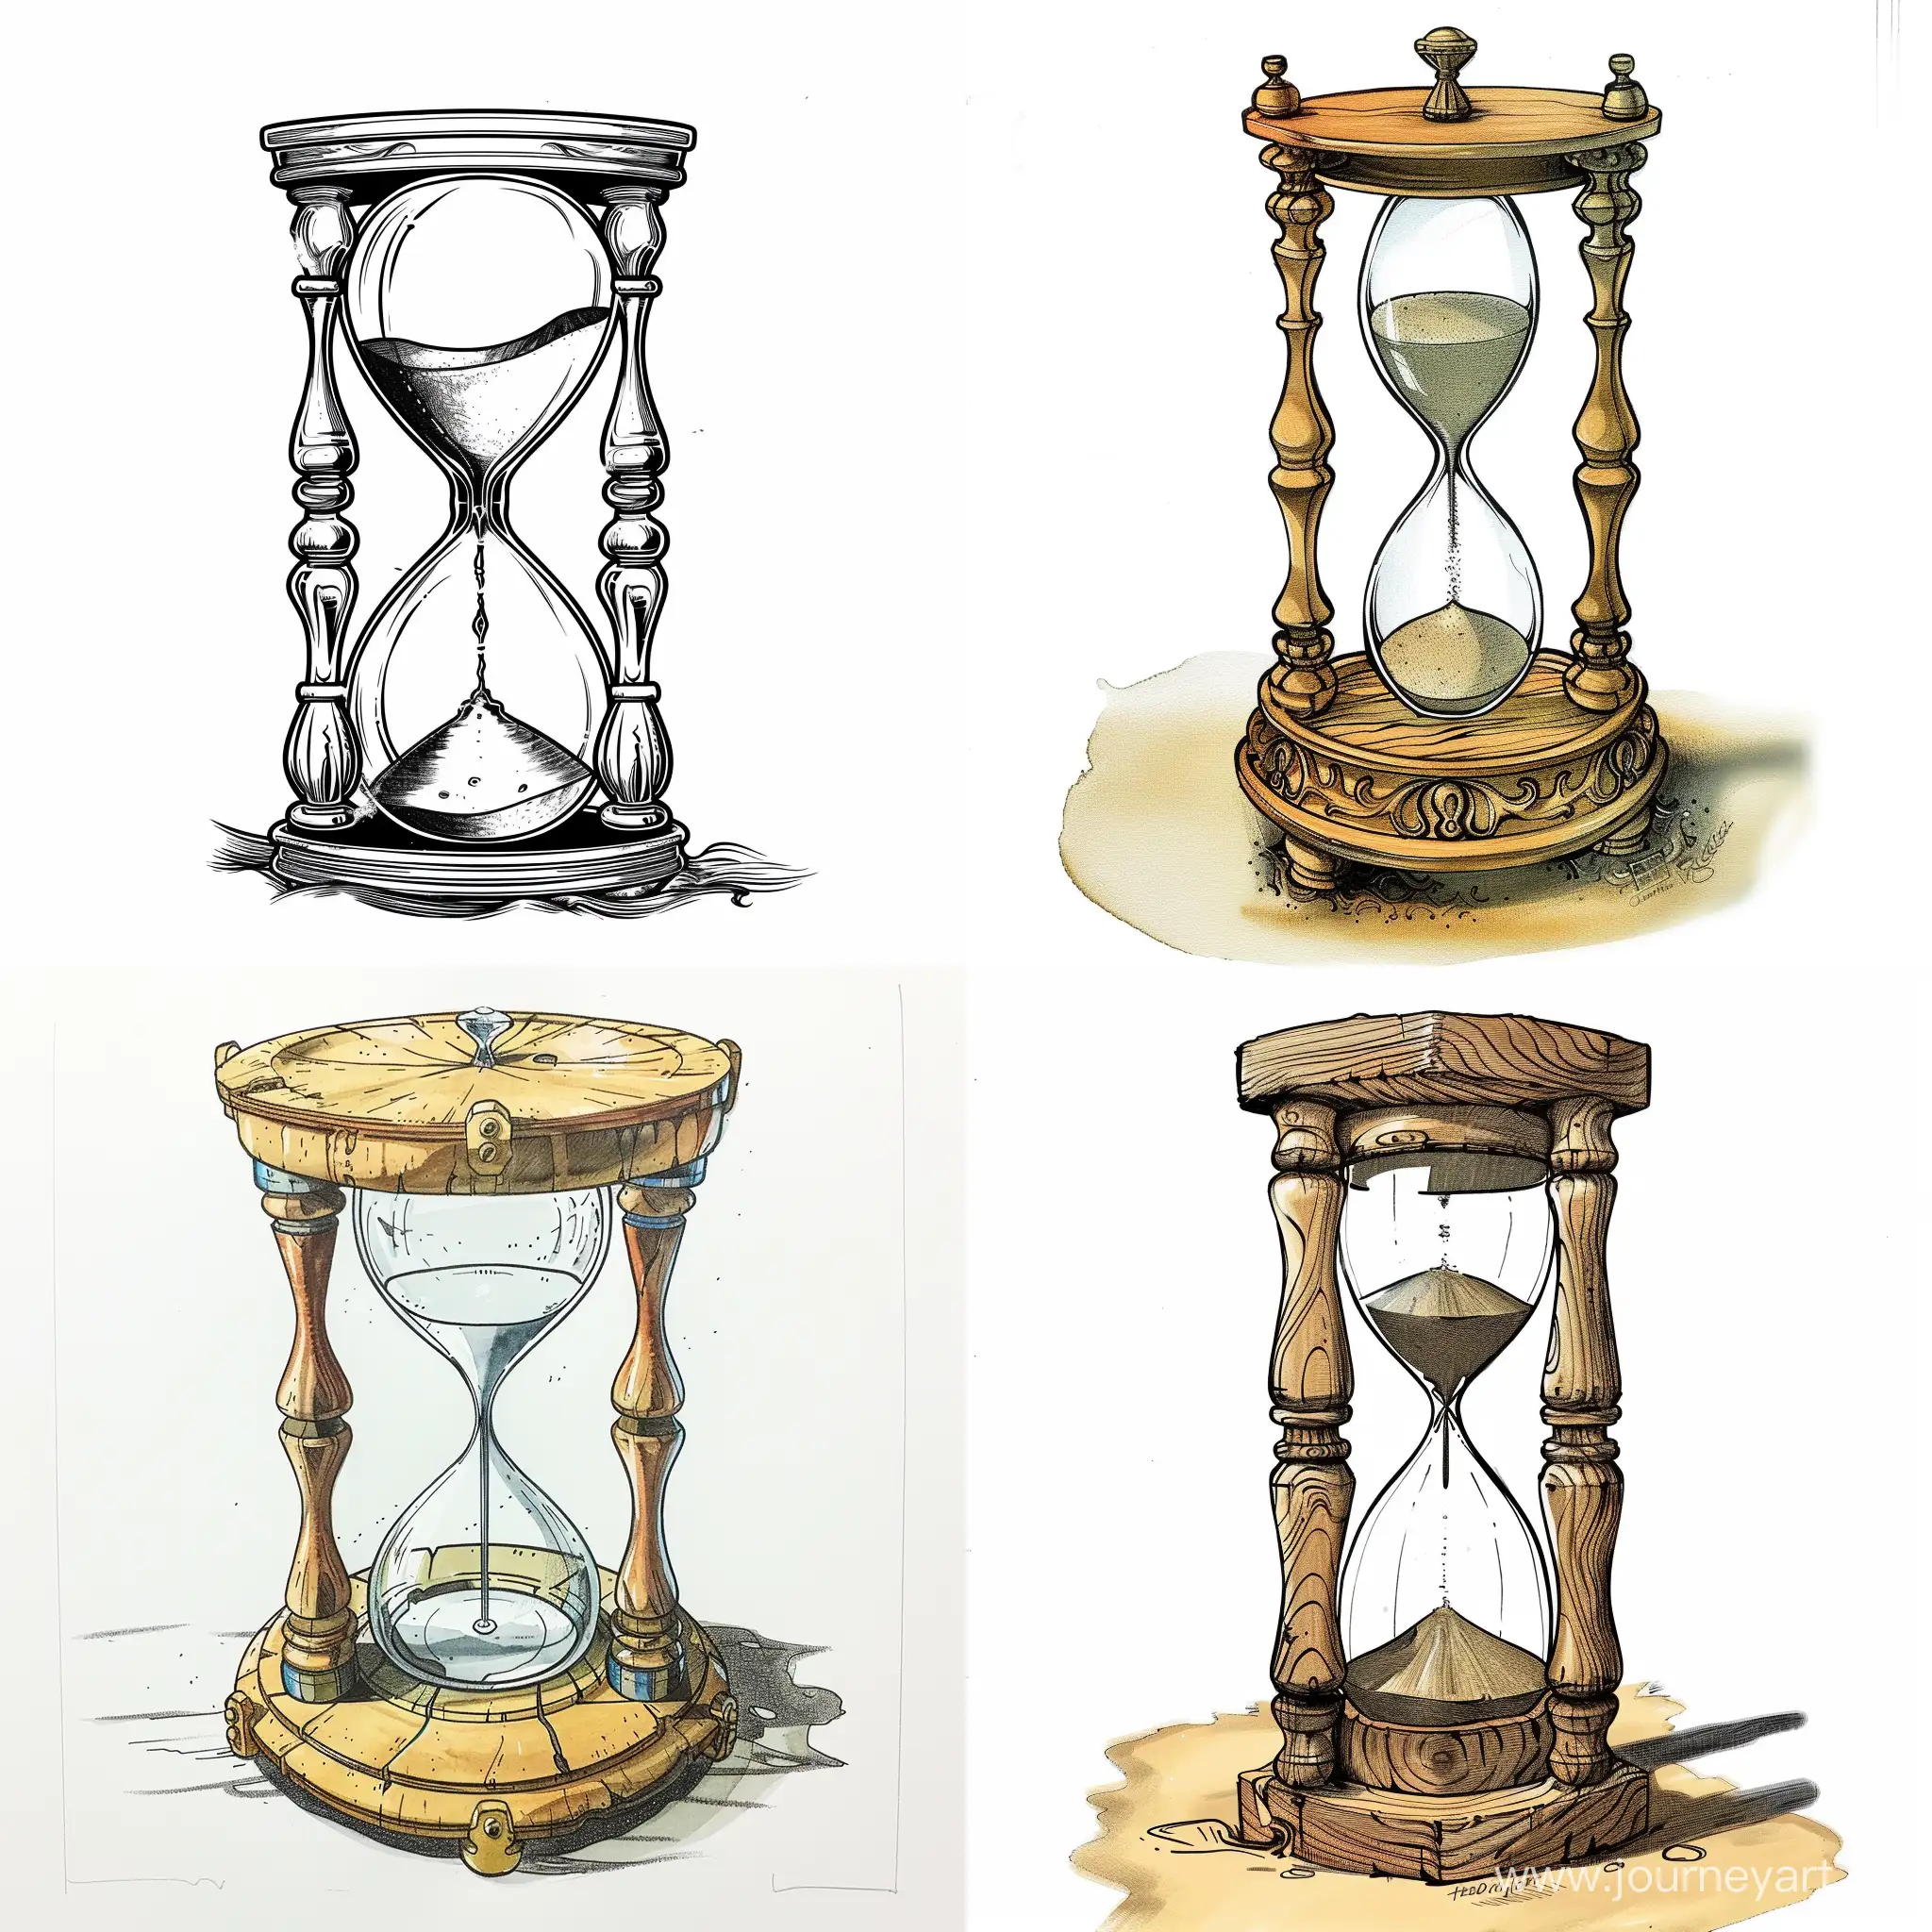 Detailed-Comic-Cartoon-Hourglass-Illustration-on-White-Background-in-Erik-Jones-Style